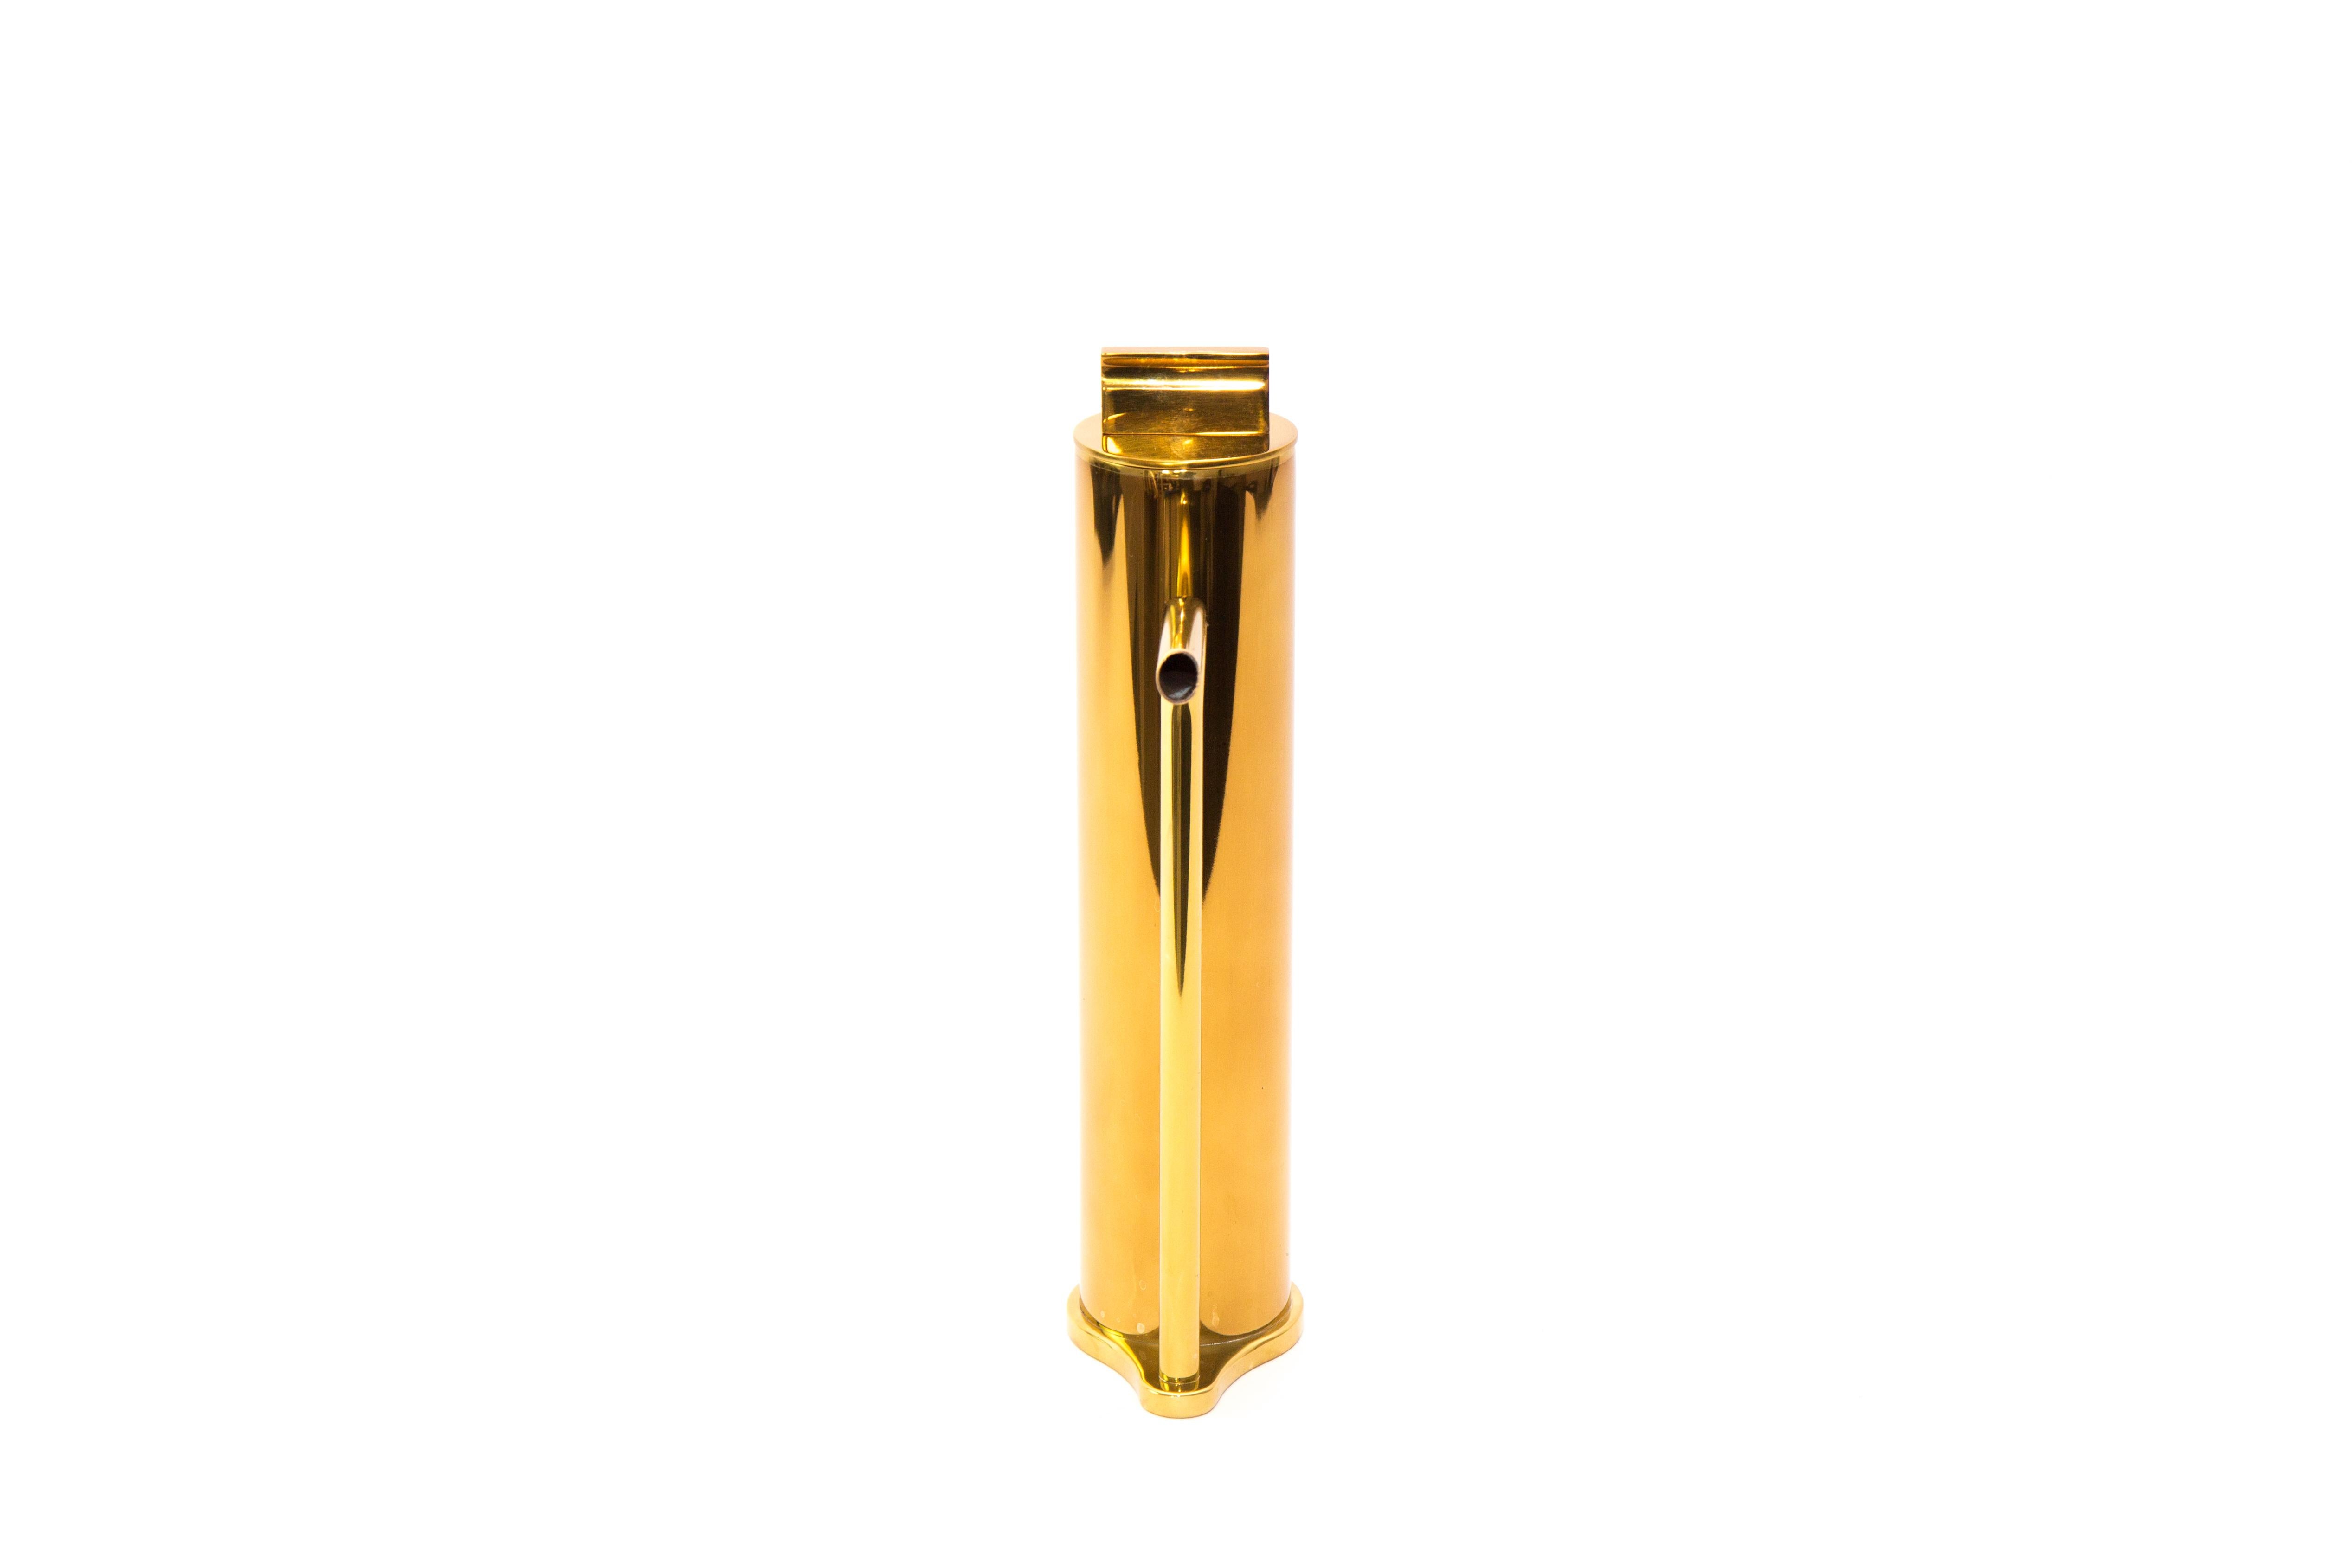 American Brass Oil Decanter by Gentner Design